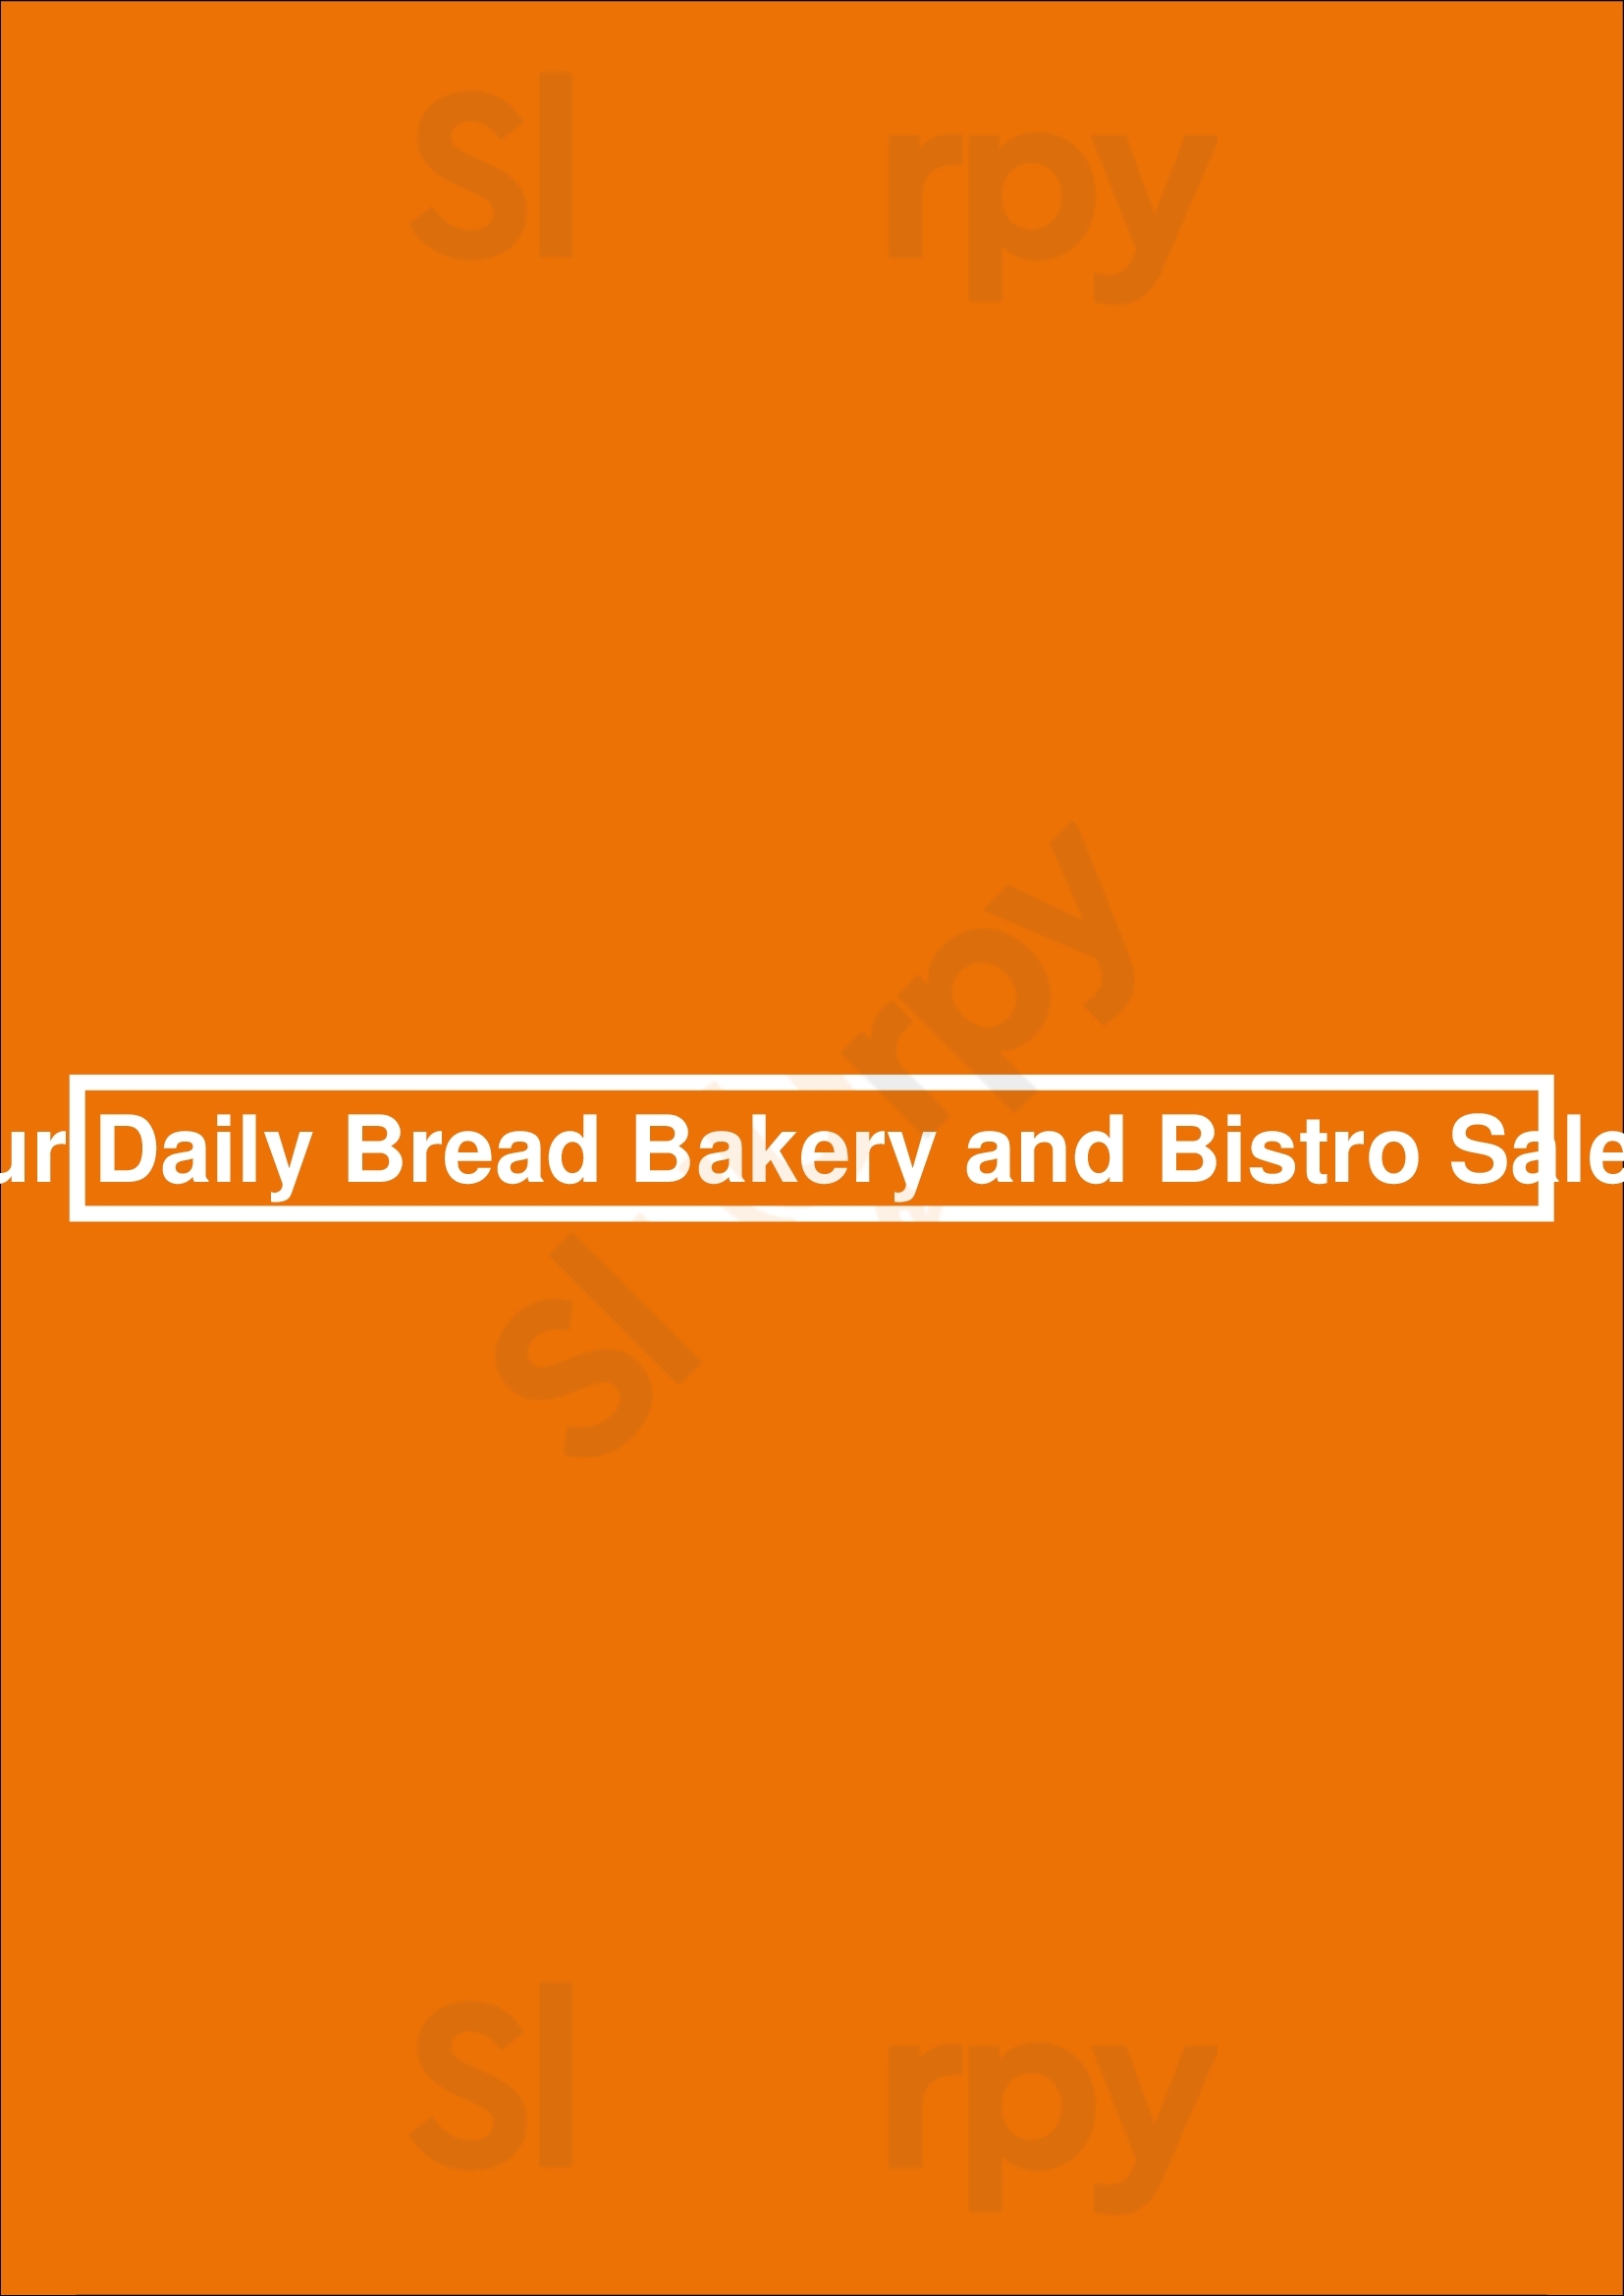 Our Daily Bread Bakery And Bistro Salem Salem Menu - 1